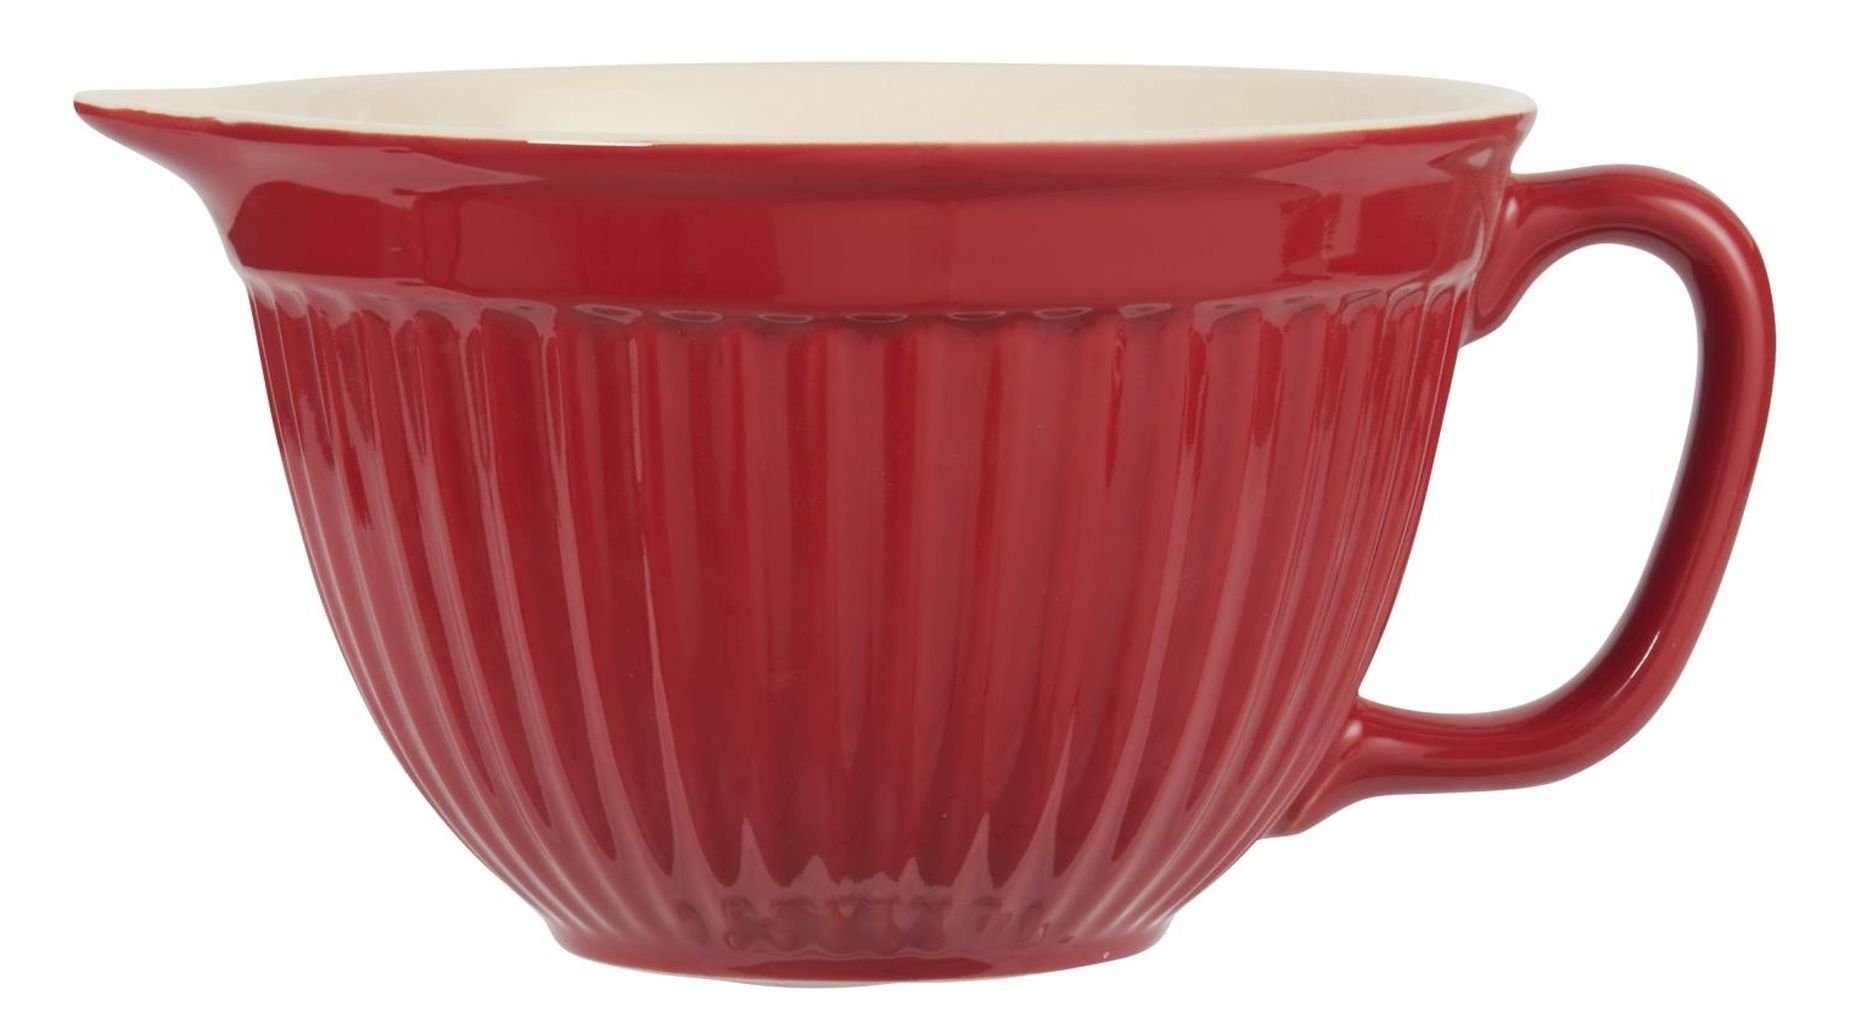 Ib Laursen Keramik Mynte Strawberry 1,5l Rührschüssel Rührschüssel Laursen Rot - Keramik (2075-33), Ib